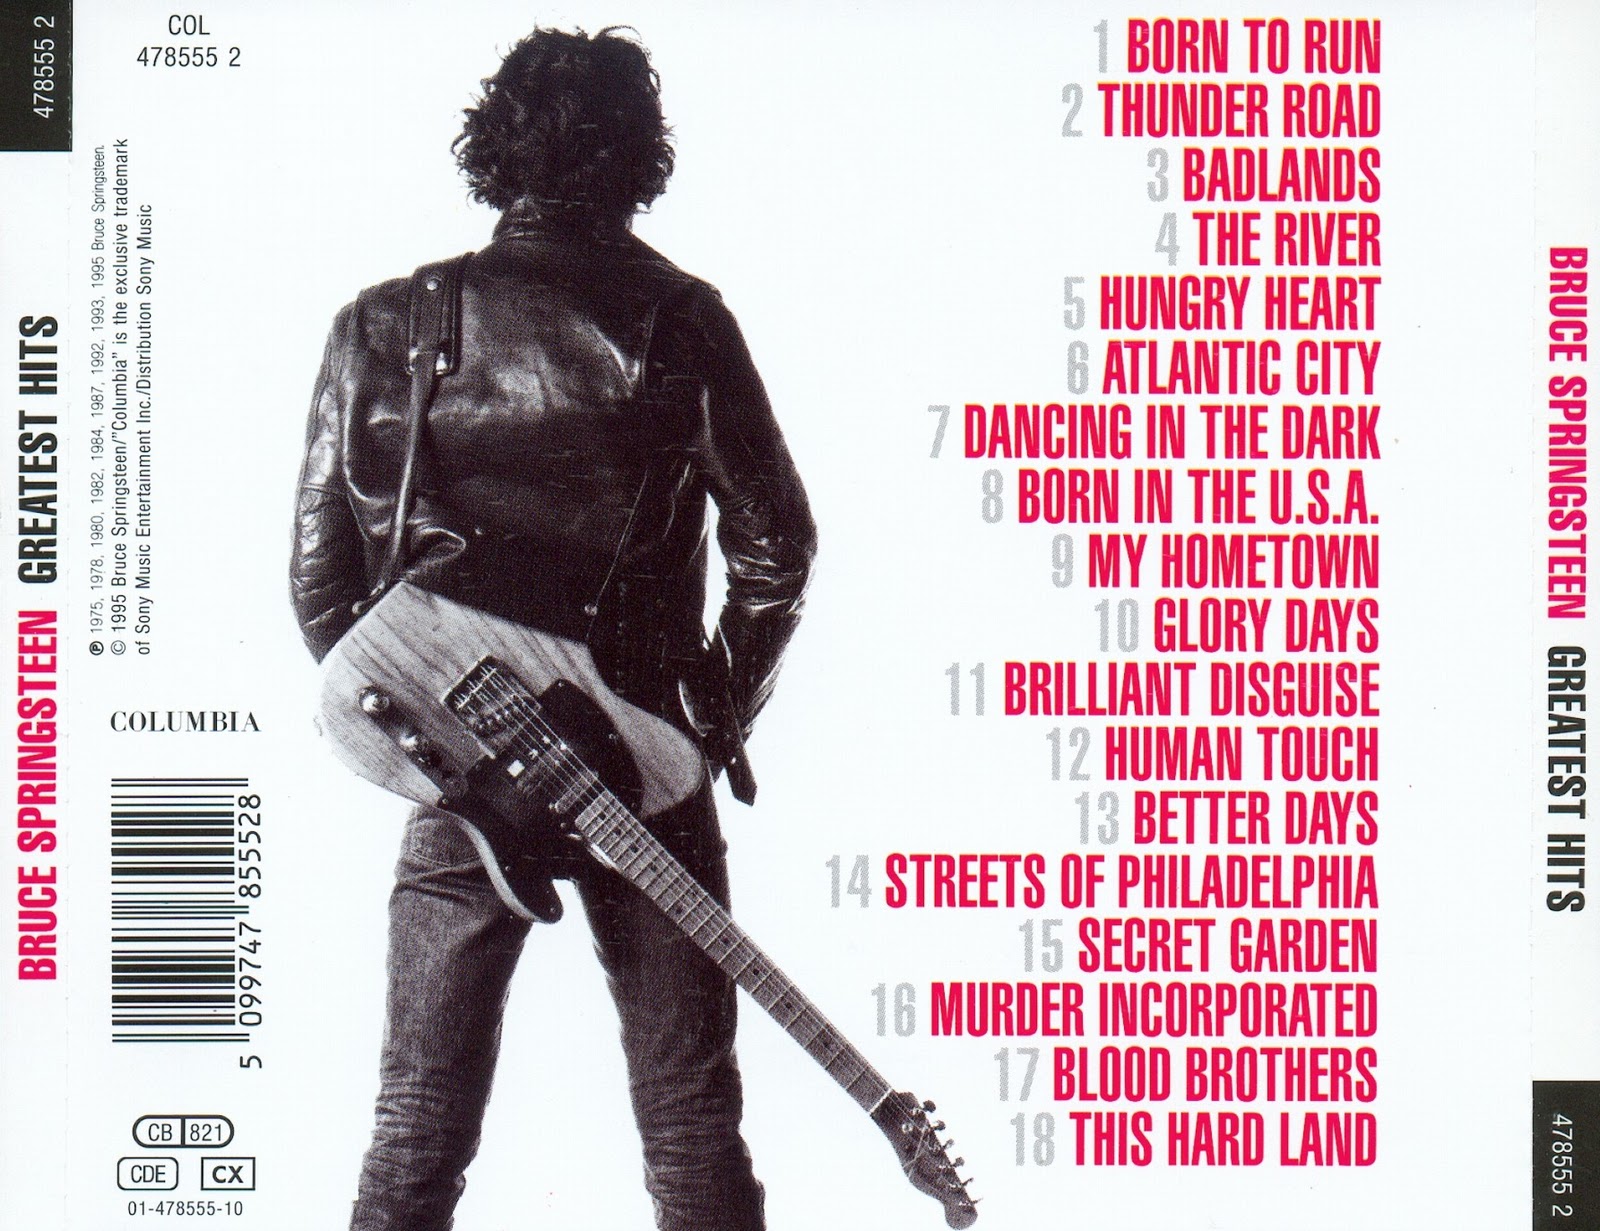 Bruce Springsteen - Greatest Hits 1995.zip